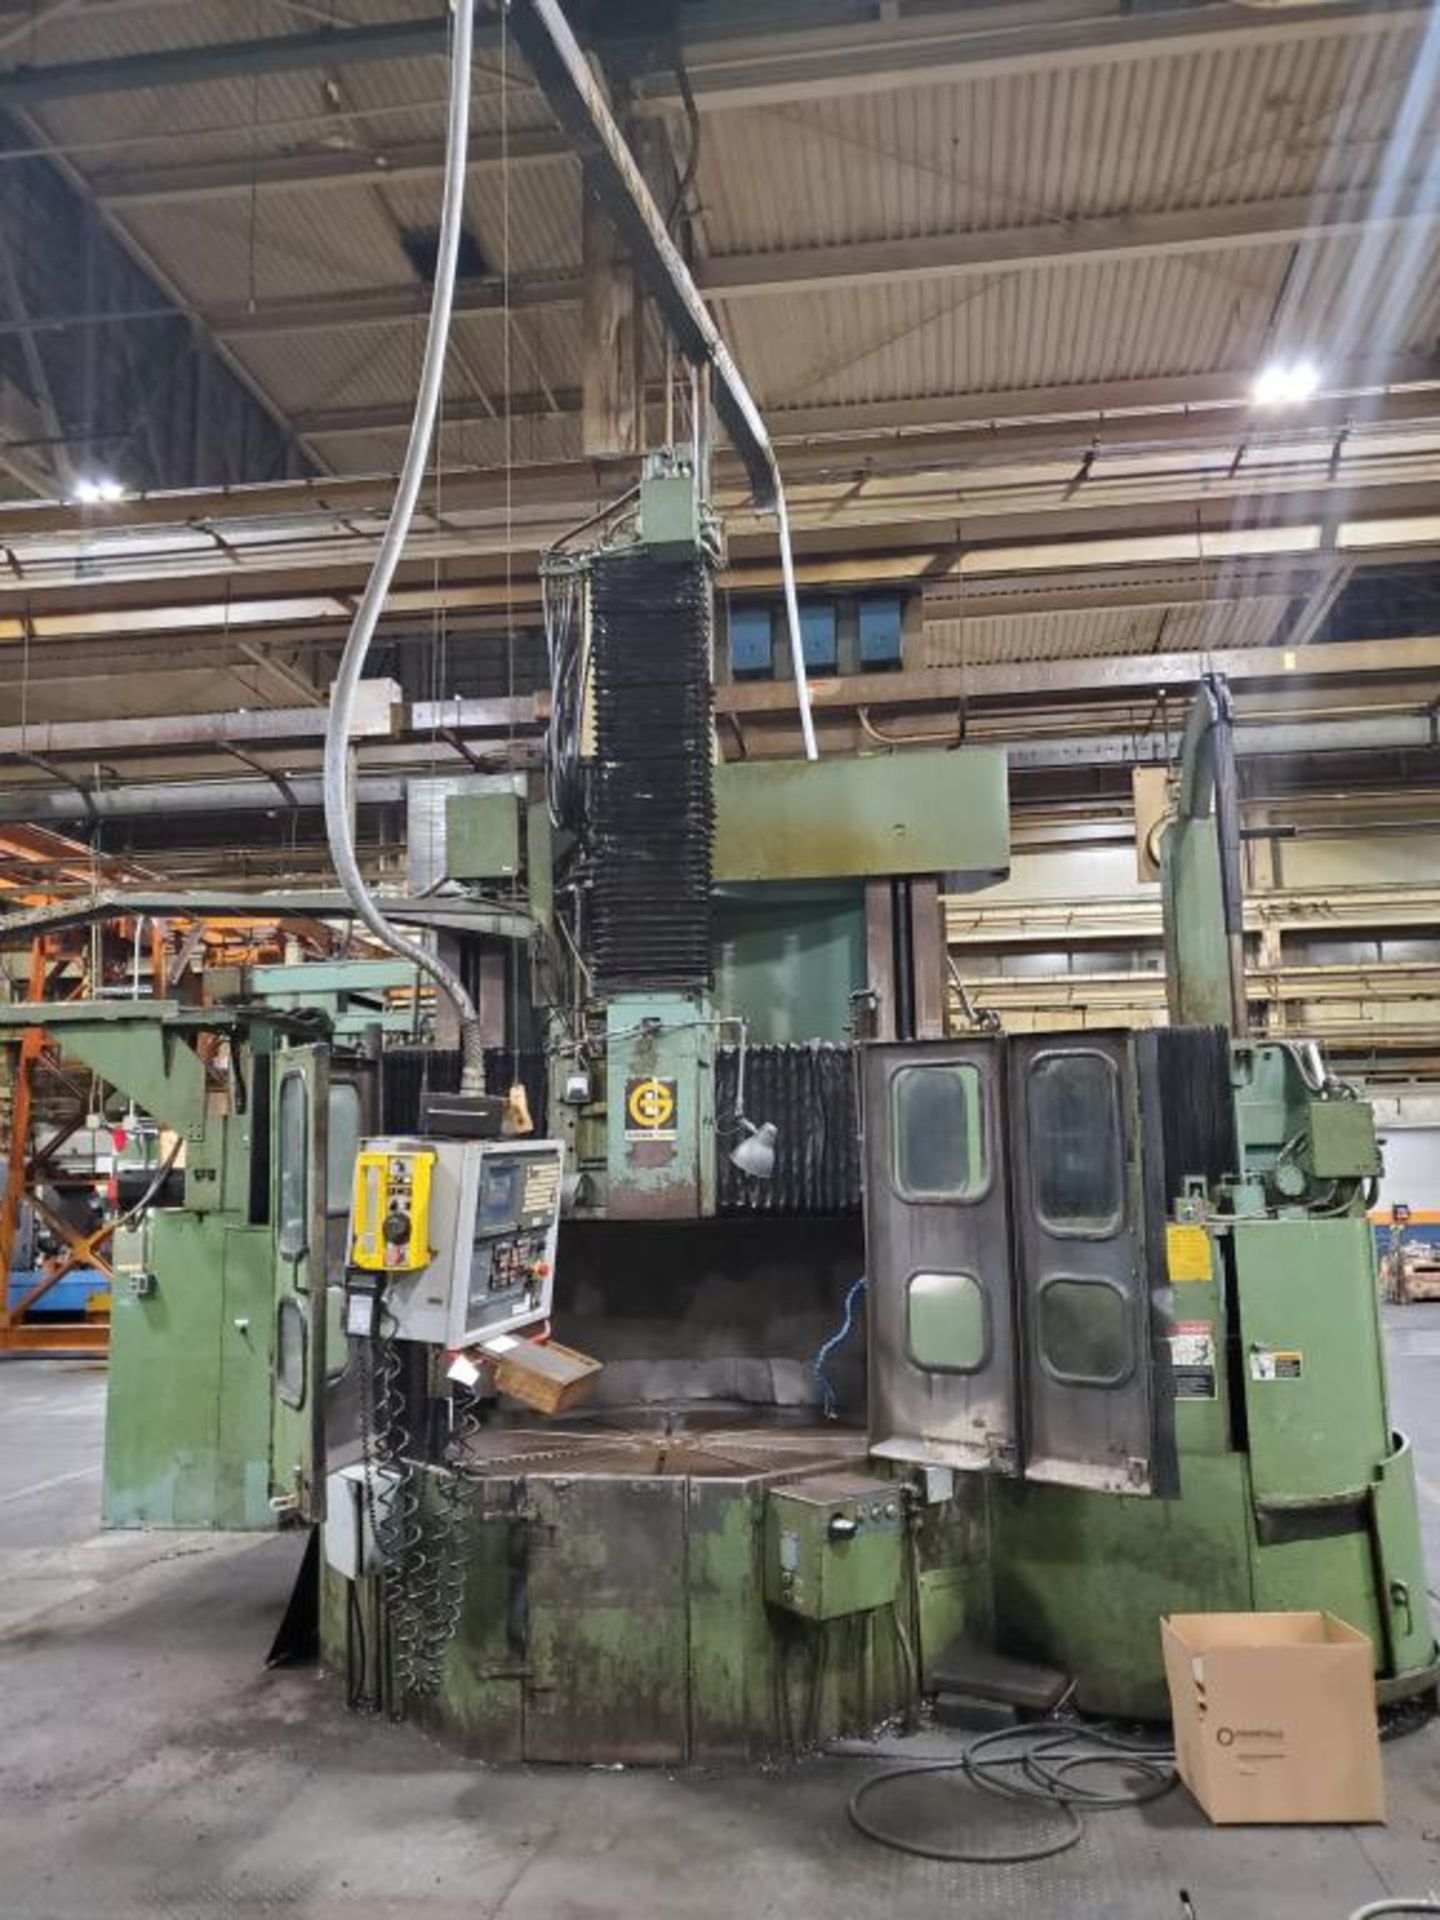 Giddings & Lewis VTC-60 CNC Vertical Boring Mill - Image 2 of 13